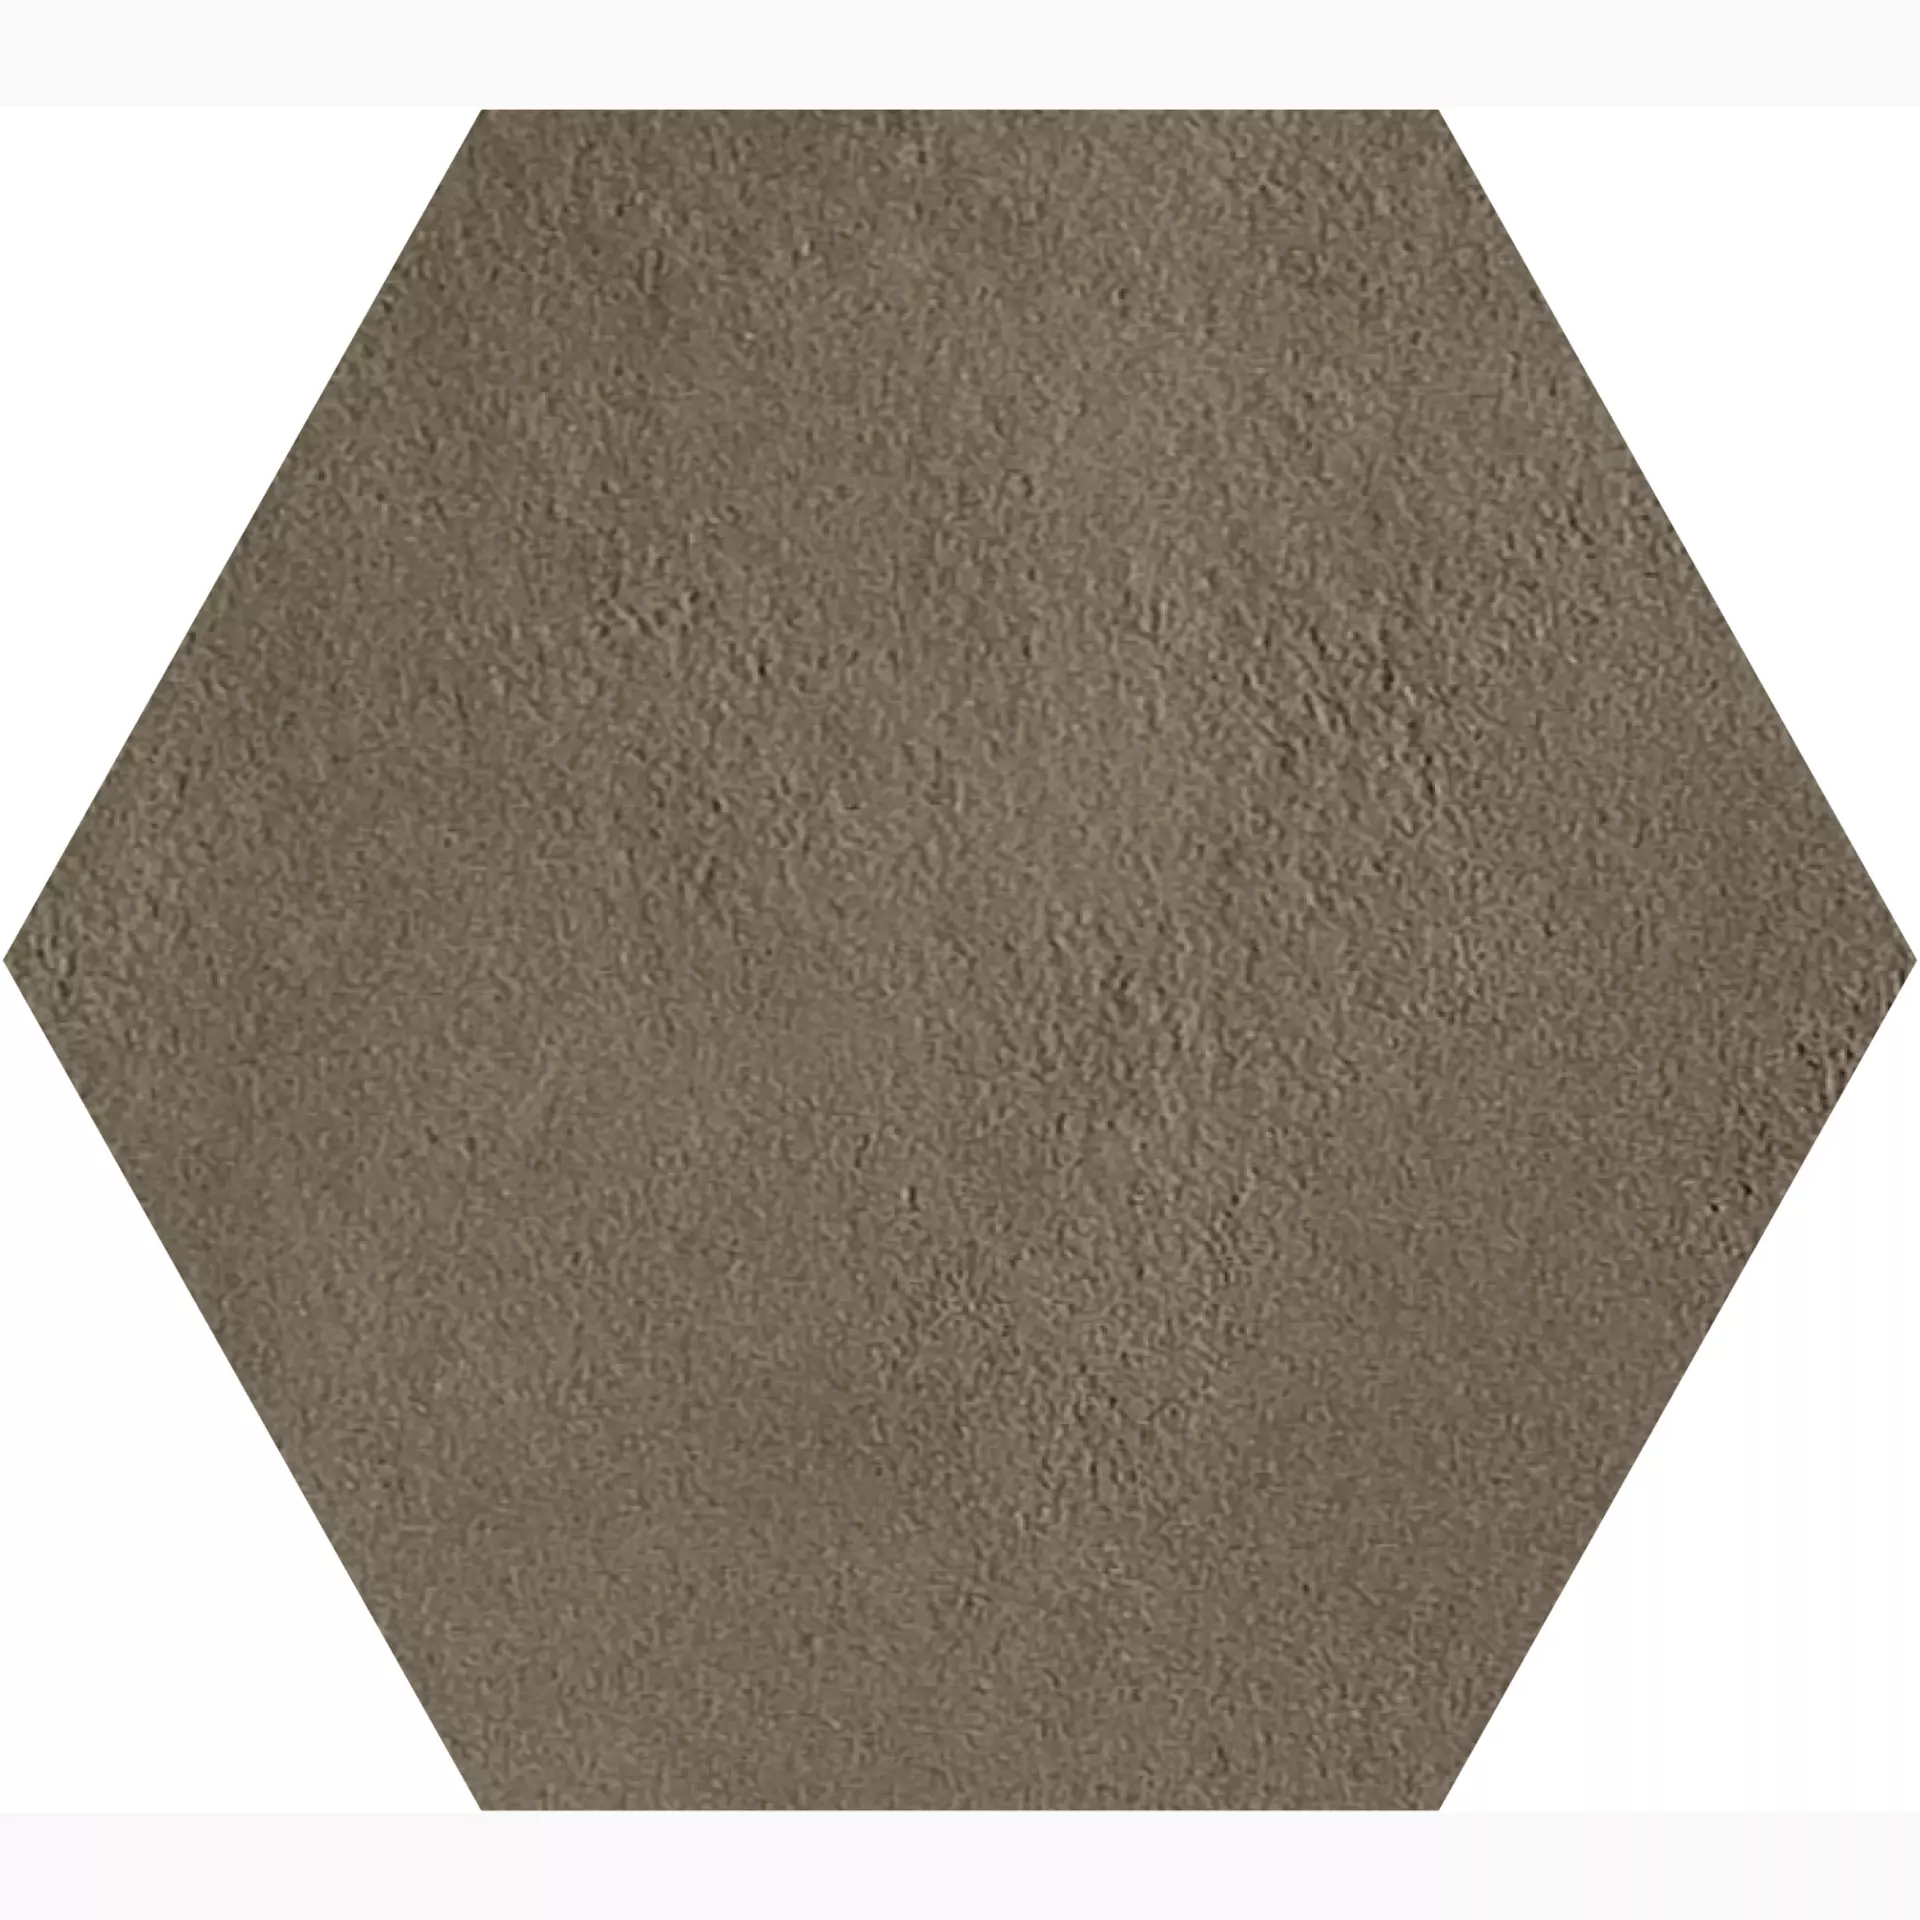 Gigacer Argilla Dark Material Decor Small Hexagon PO9ESADARK 16x18cm 6mm